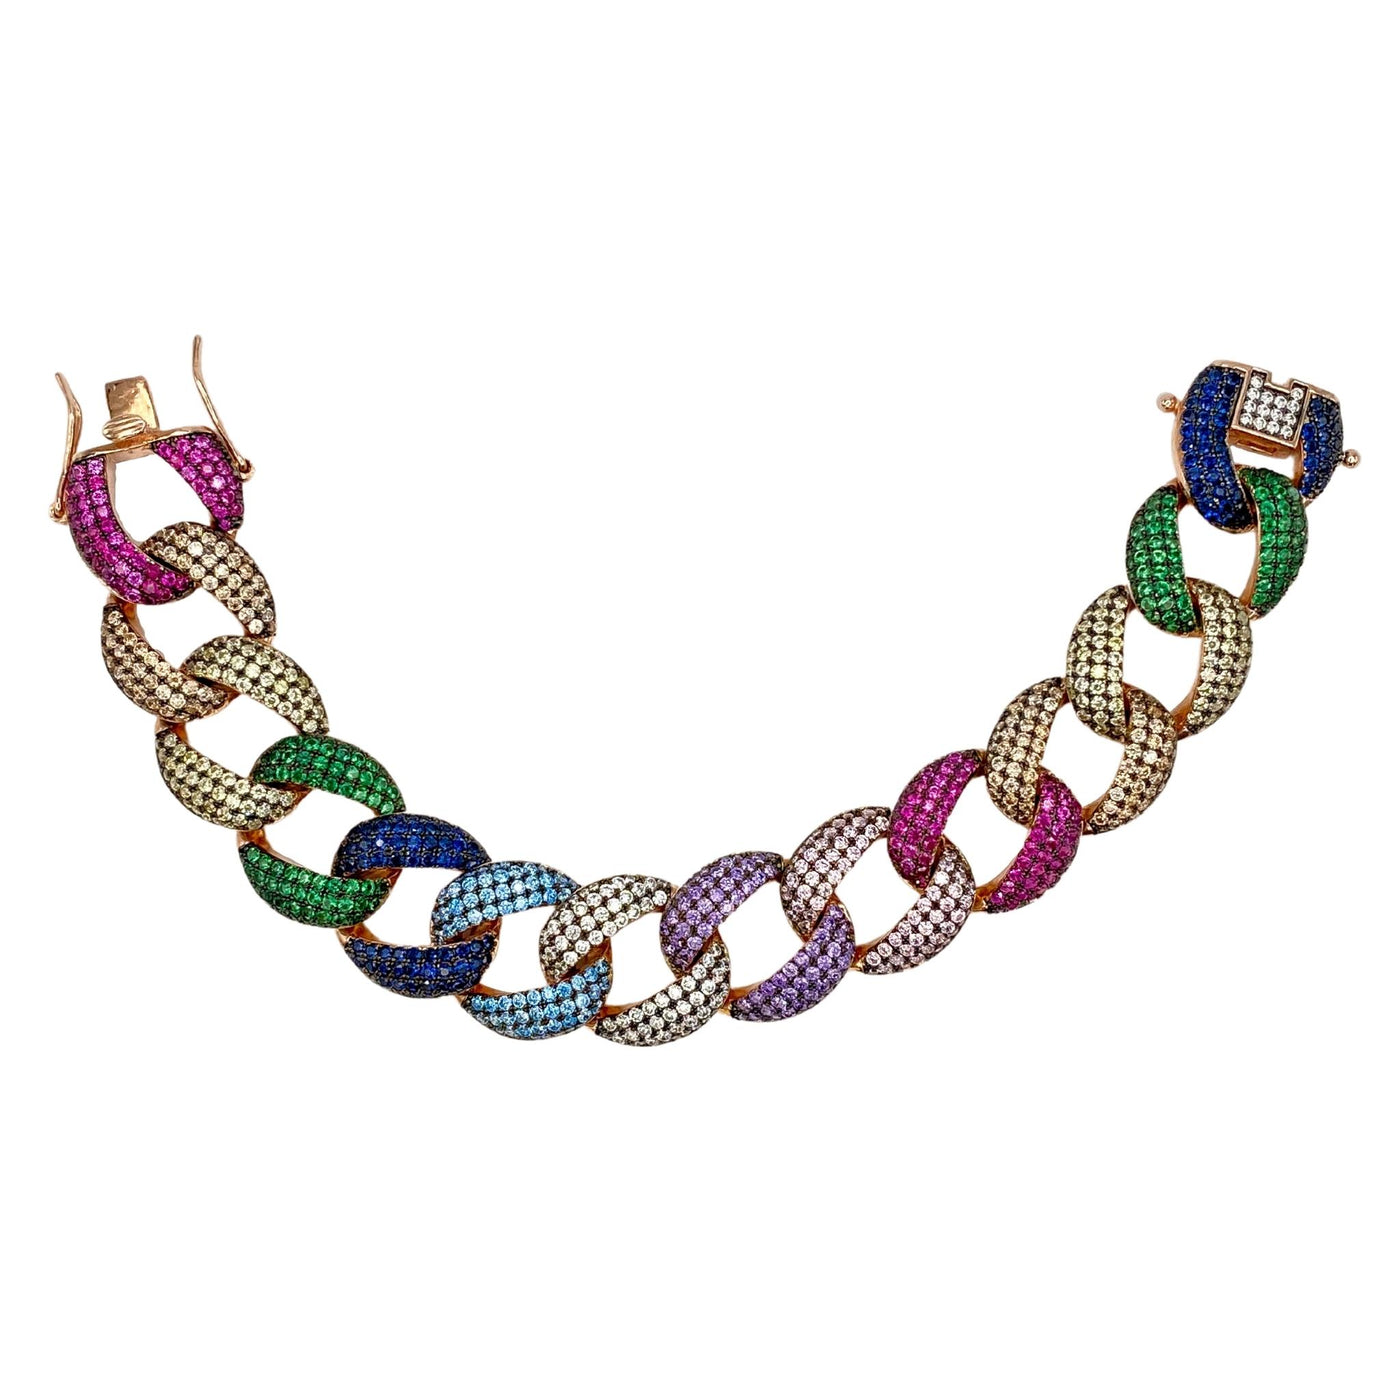 Silver groumette rainbow bracelet